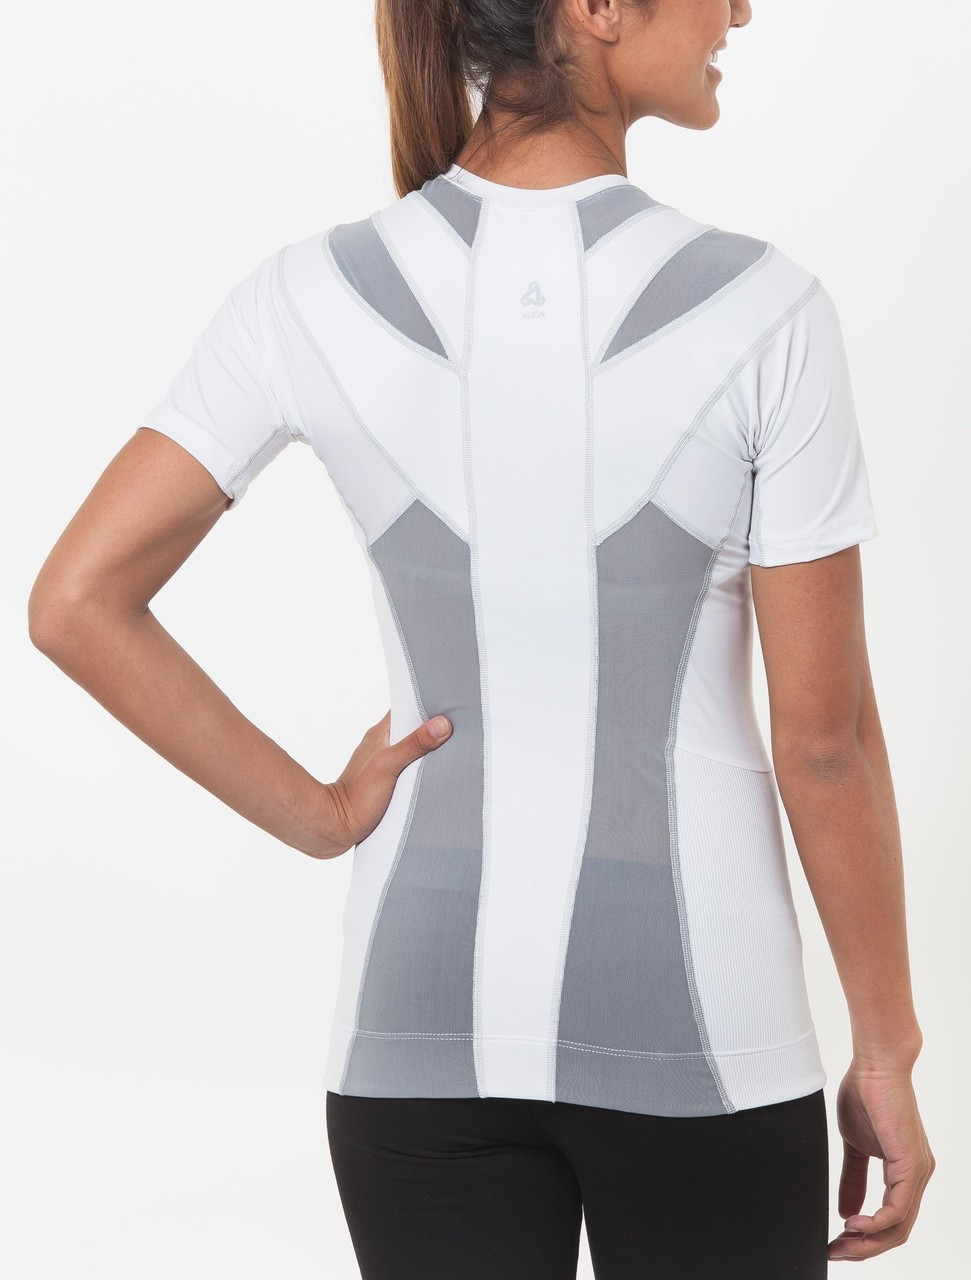 AlignMed Posture Shirt 2.0 - Women's - My PT Store